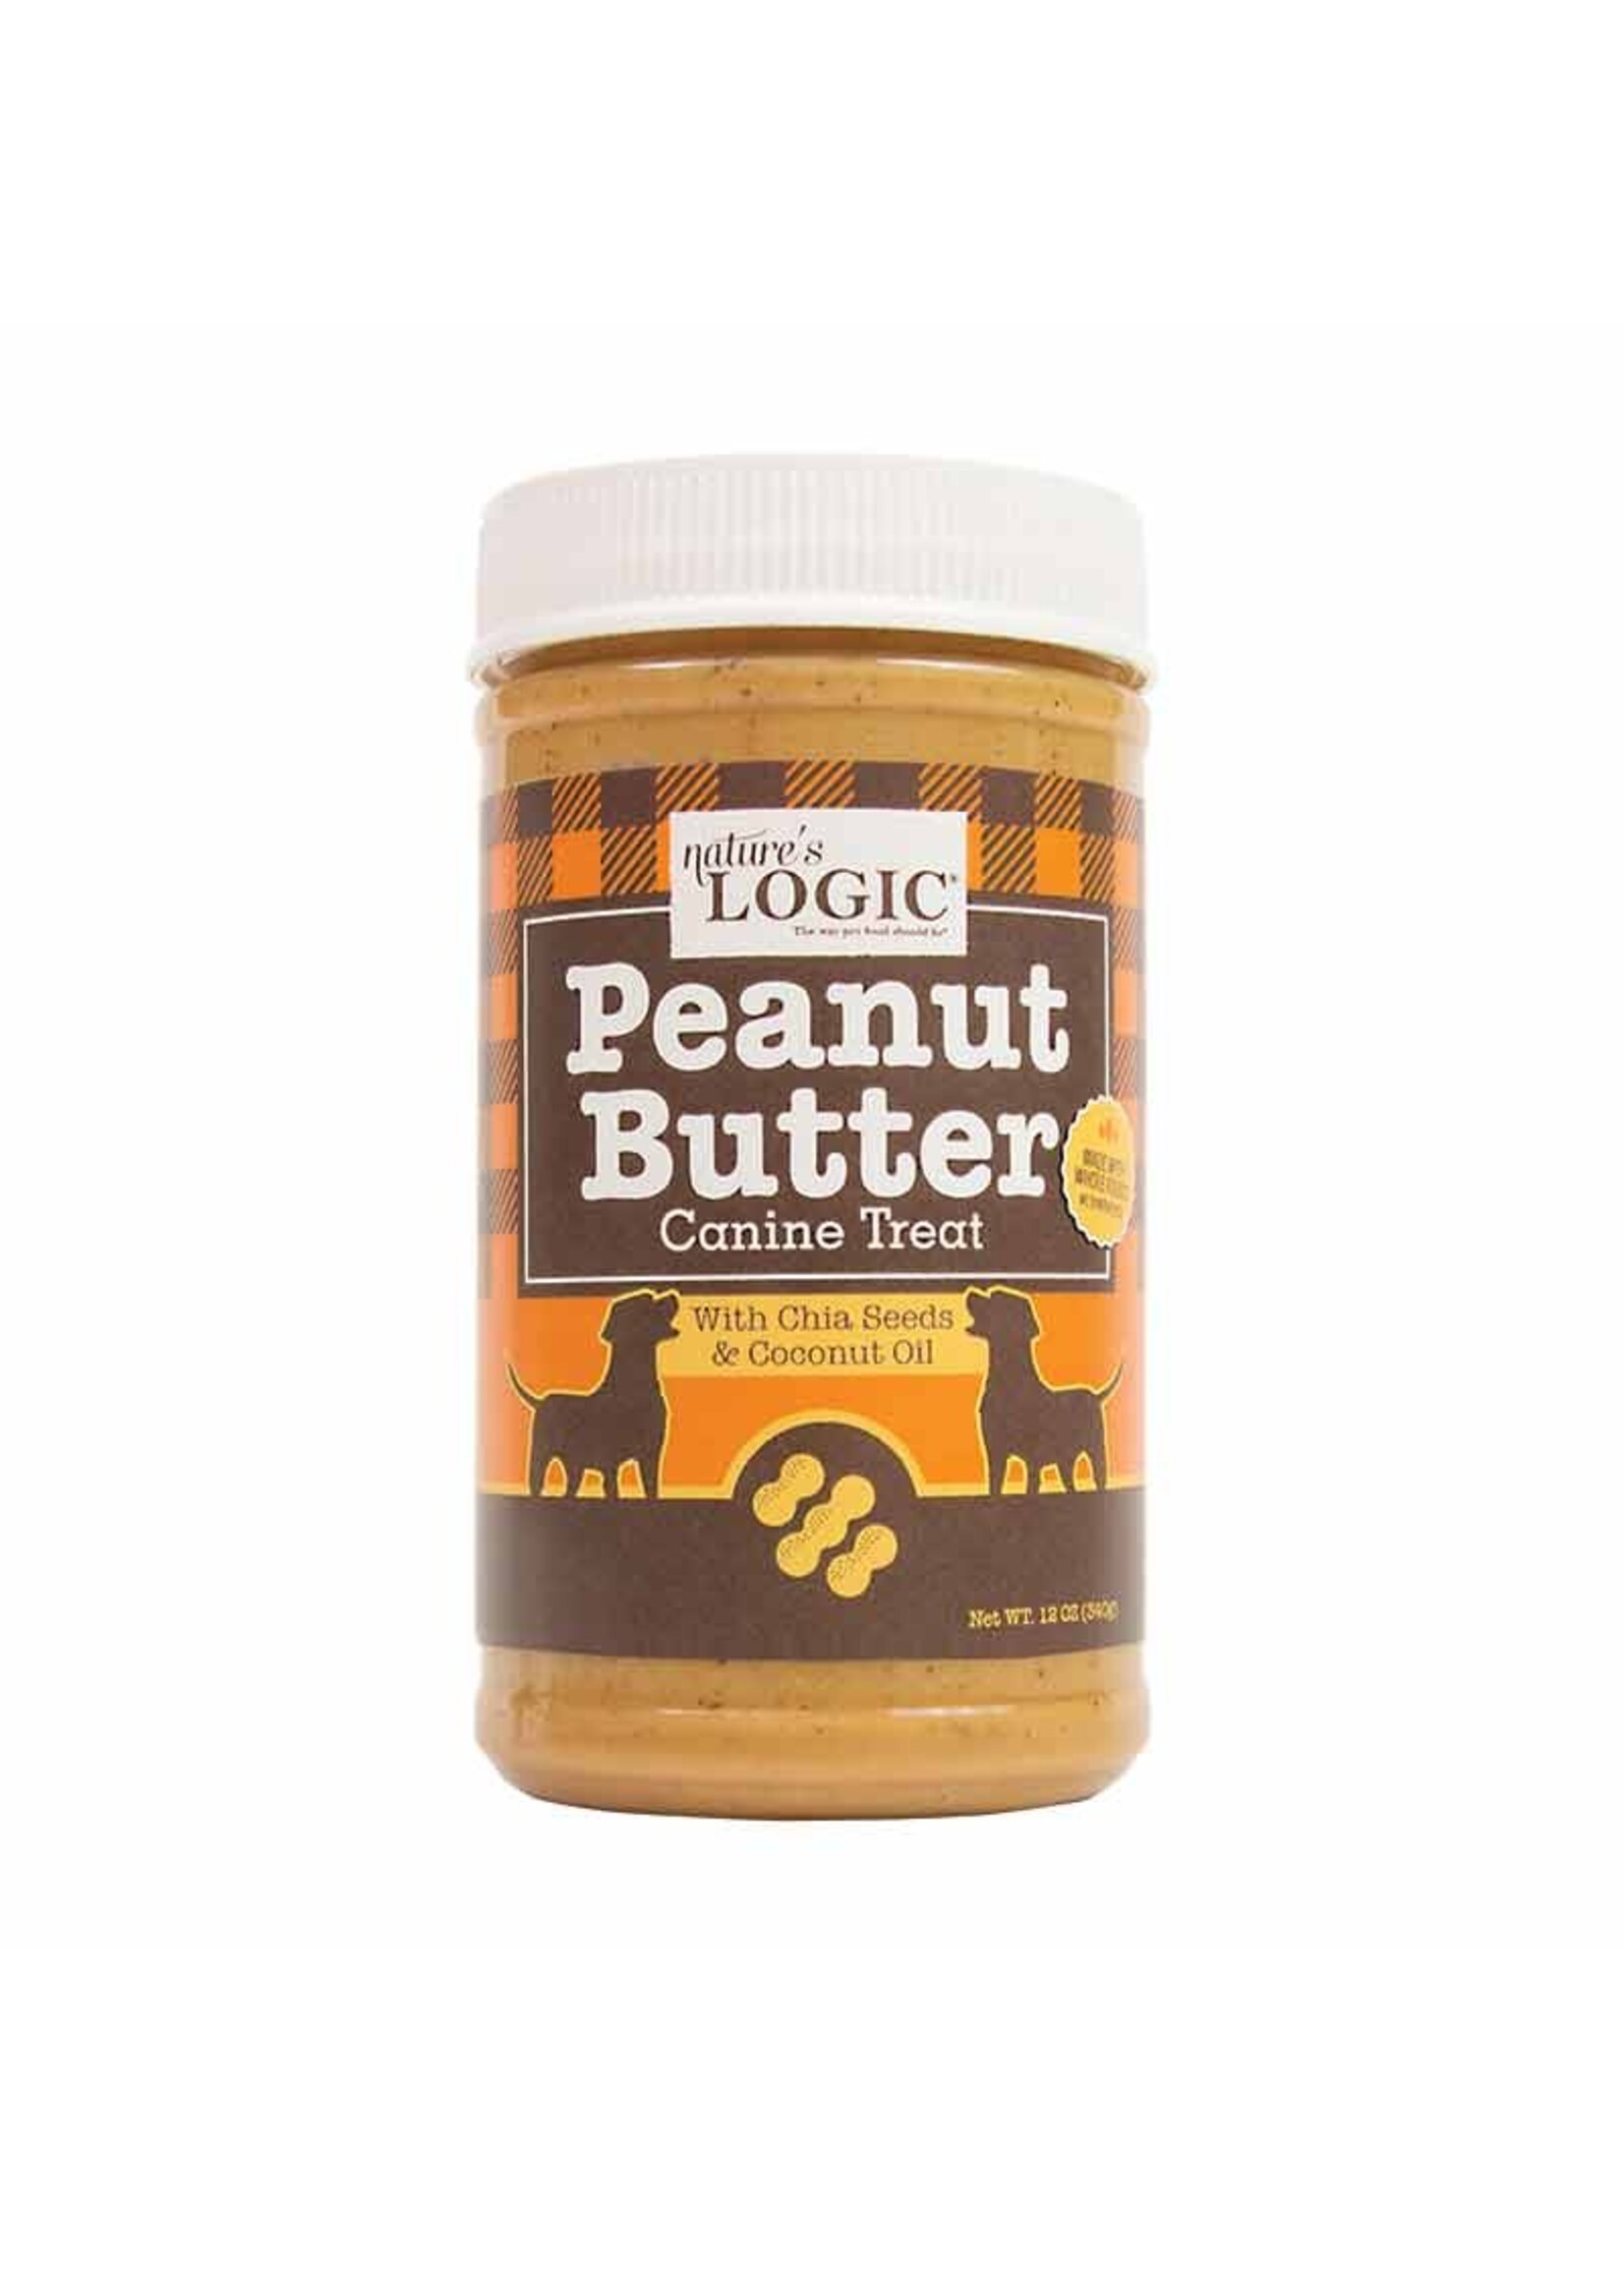 Nature's Logic Peanut Butter Canine Treat 12 oz